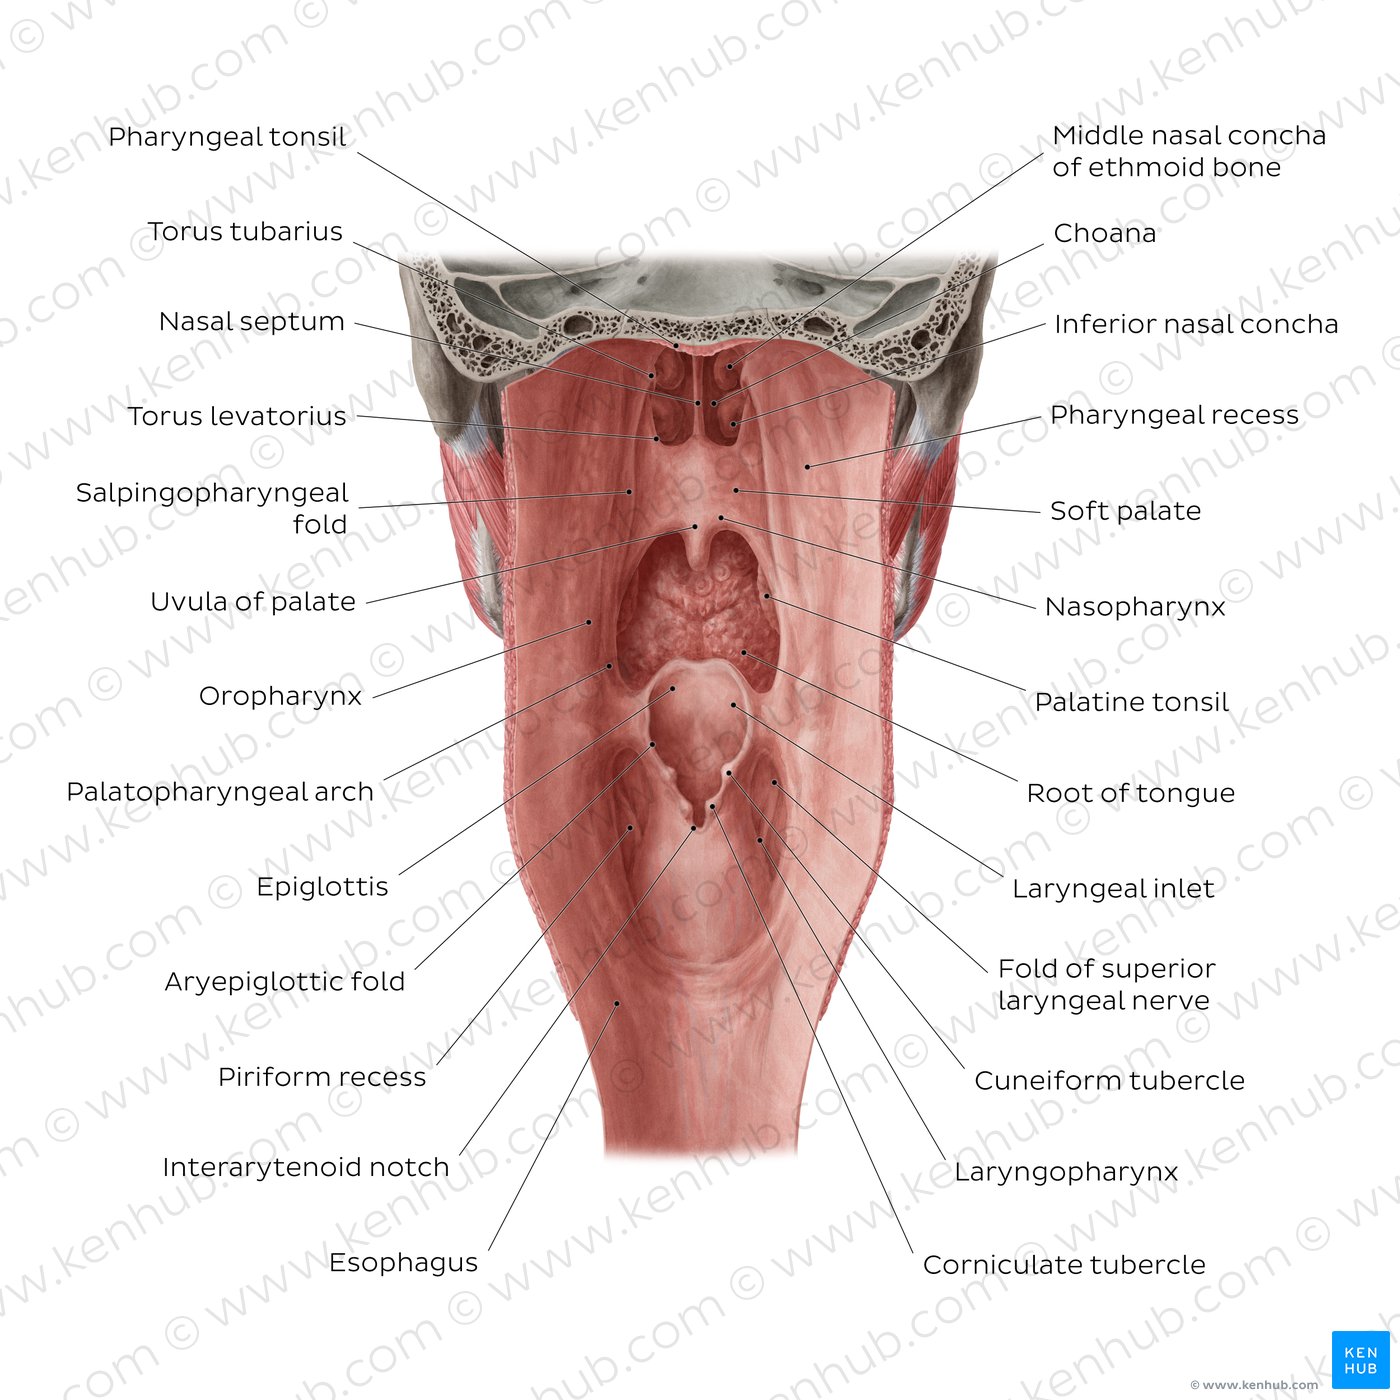 Figure 3. Pharyngeal mucosa